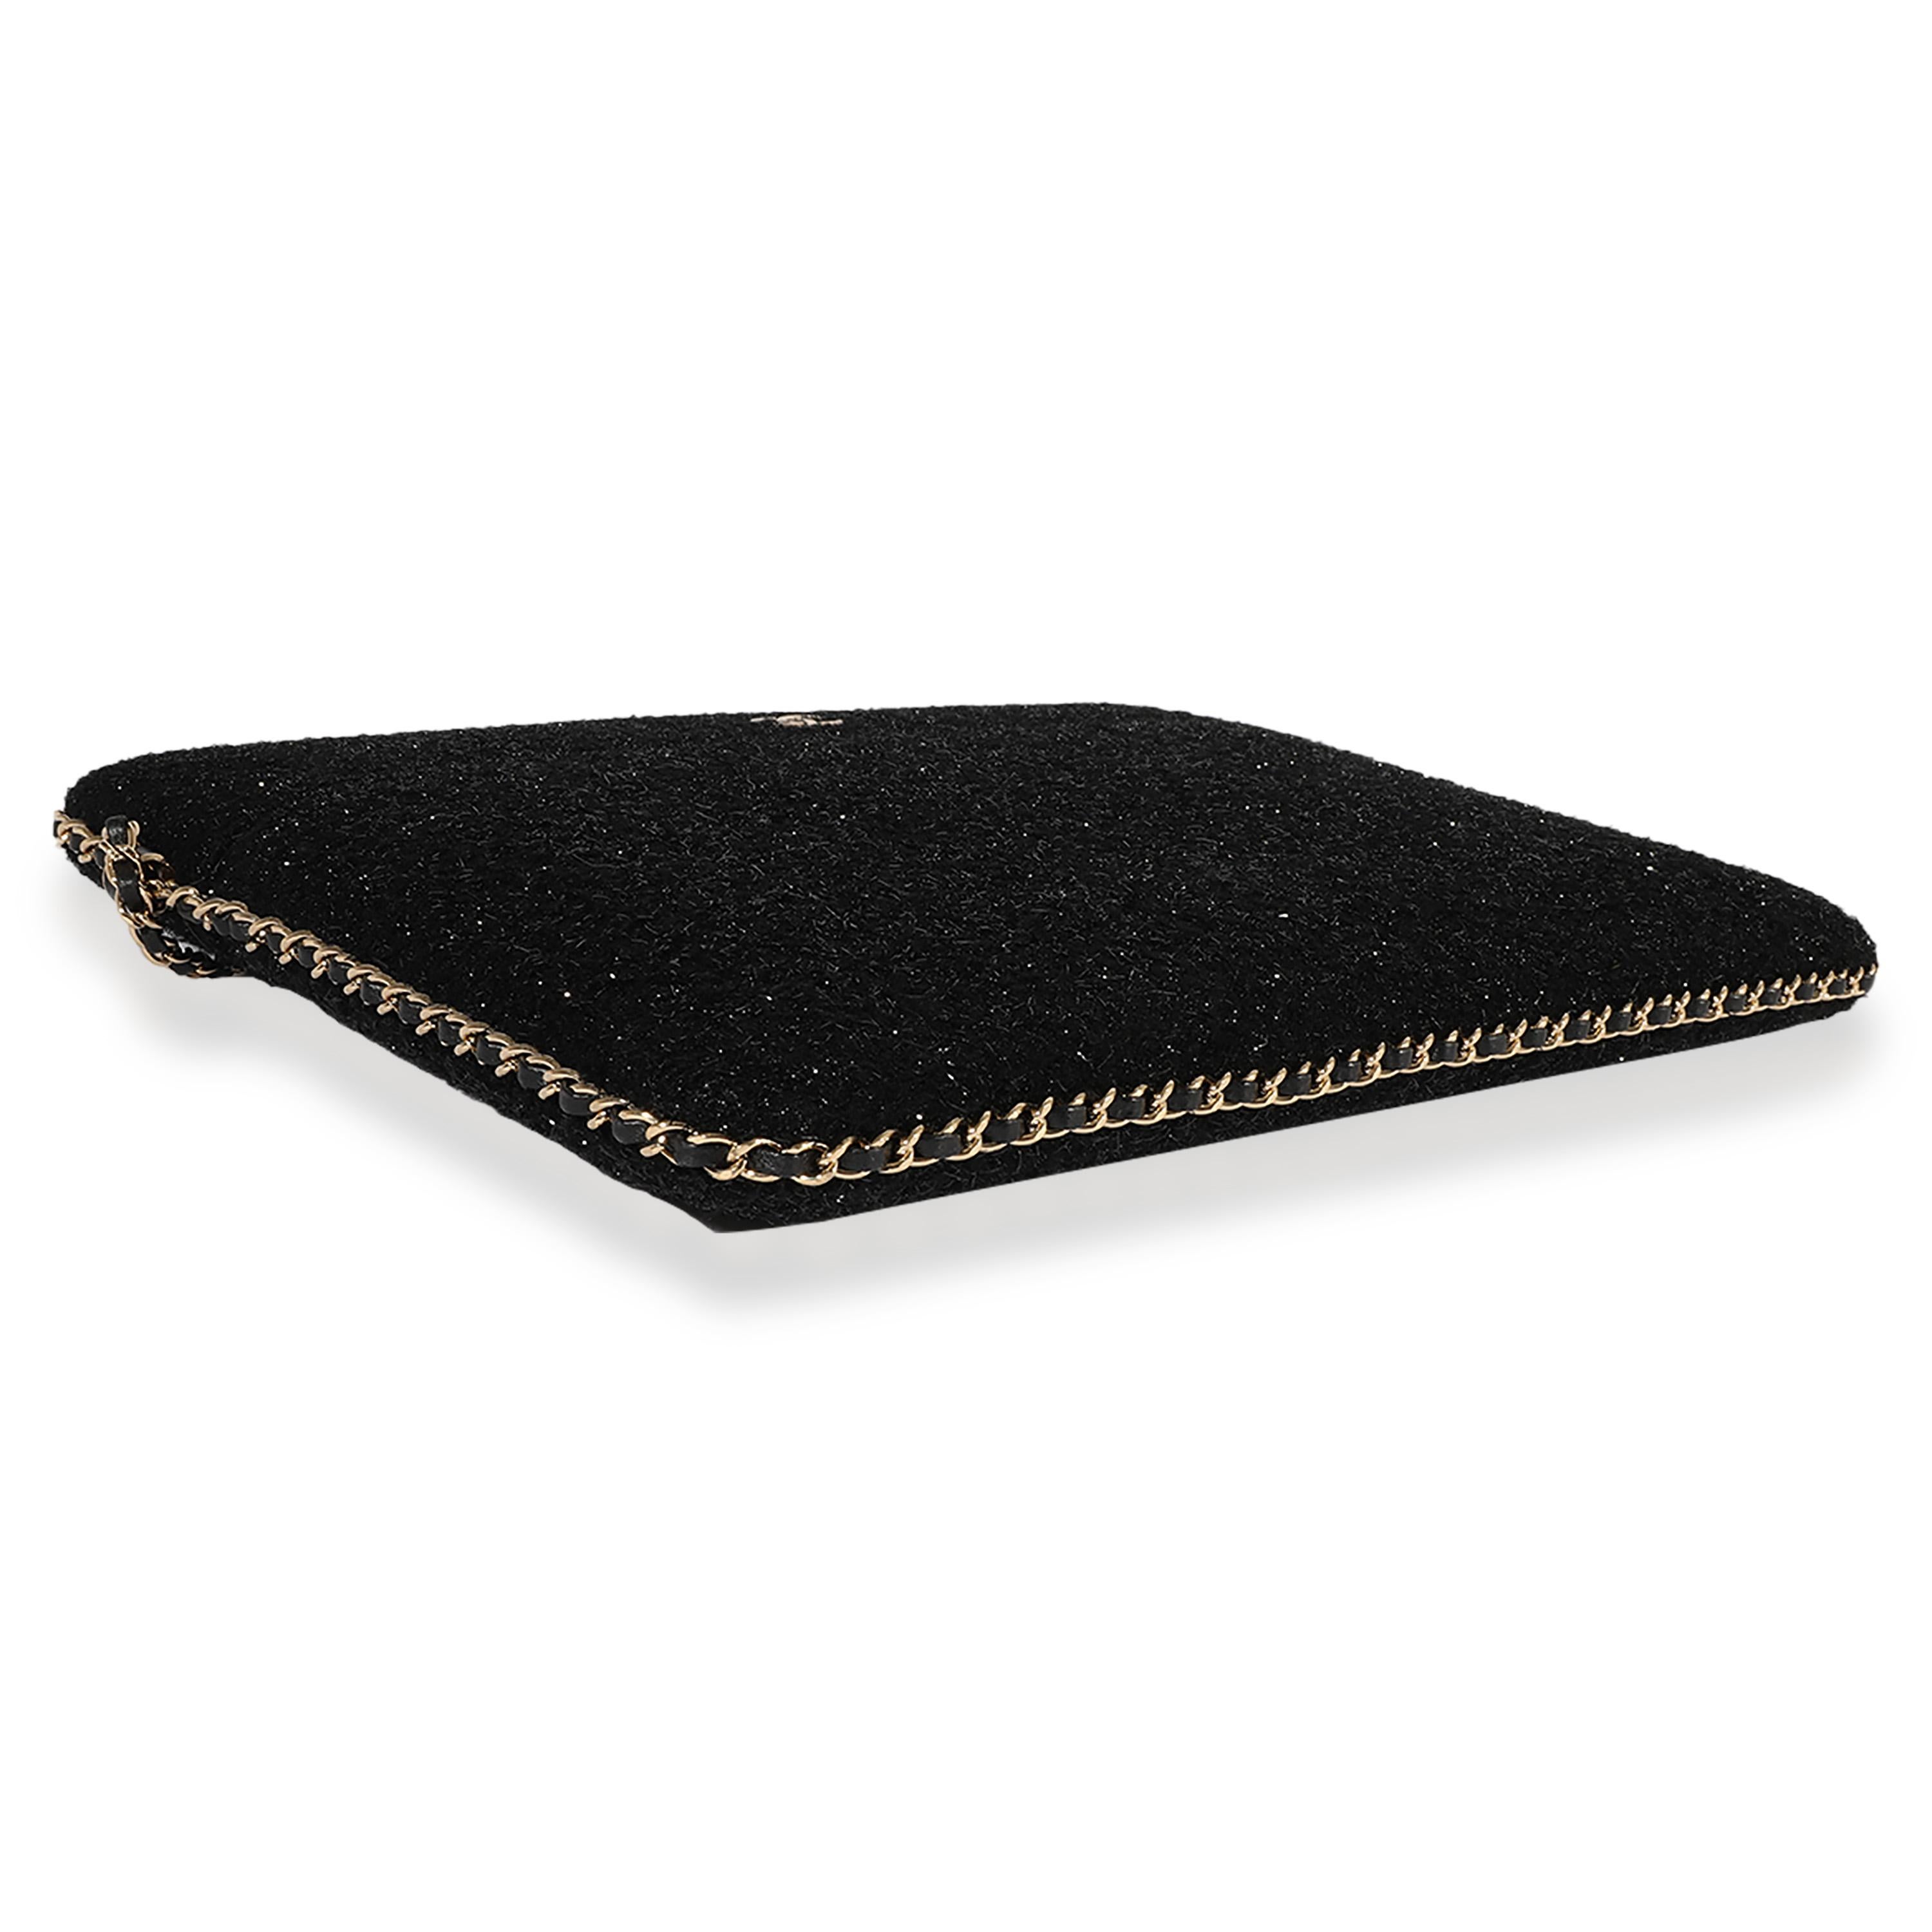 Chanel Black Metallic Tweed iPad Case with Chain 1